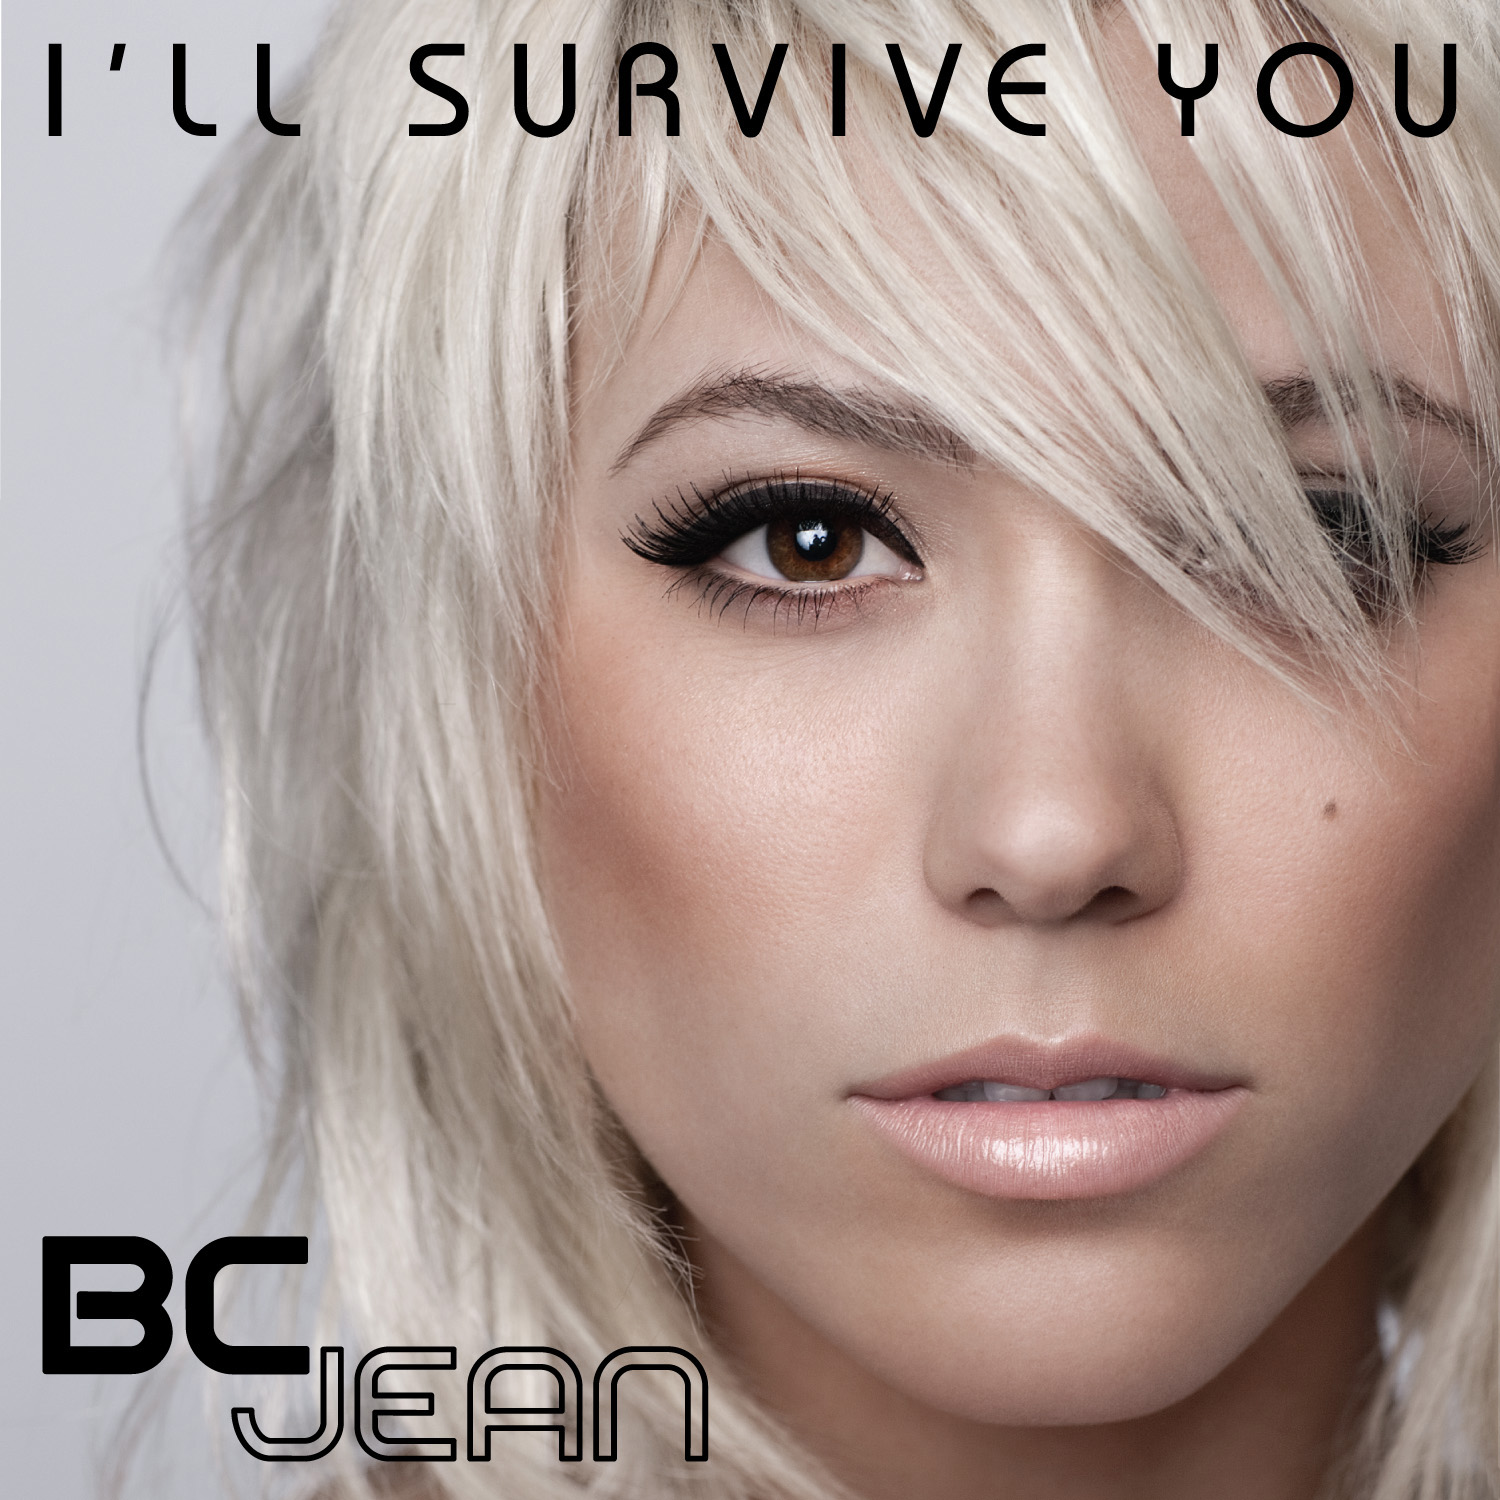 http://3.bp.blogspot.com/-tU_LJfWnj1s/TYjSDpx-_5I/AAAAAAAAIgQ/p484pGQlyIA/s1600/BC+Jean+-+I%2527ll+Survive+You+Lyrics.jpg